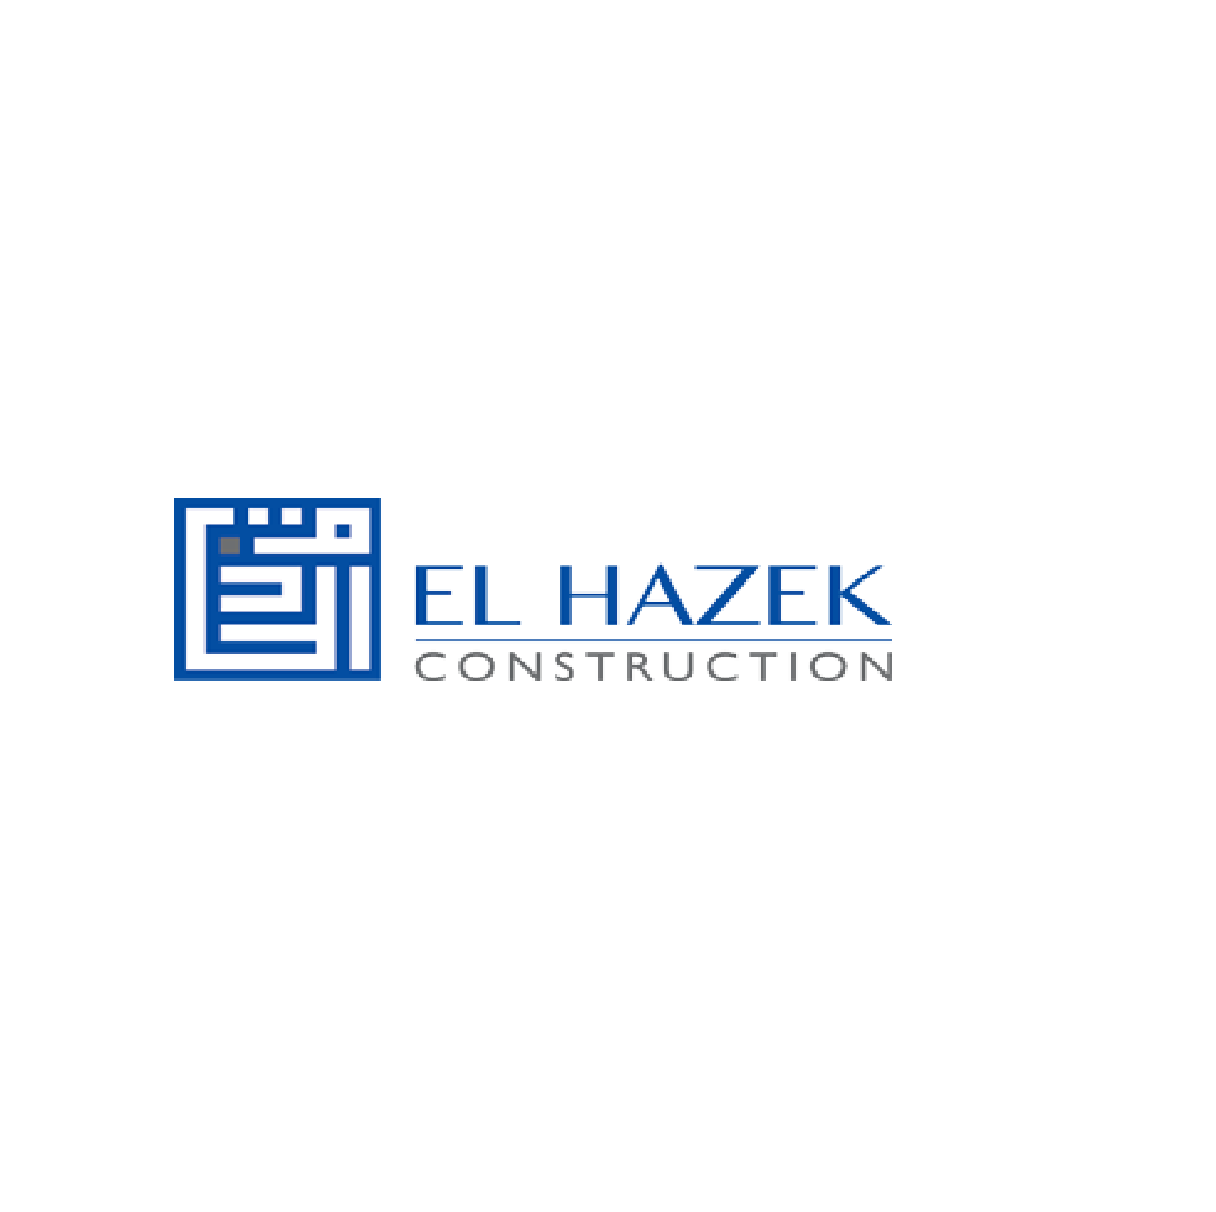 El Hazek Construction